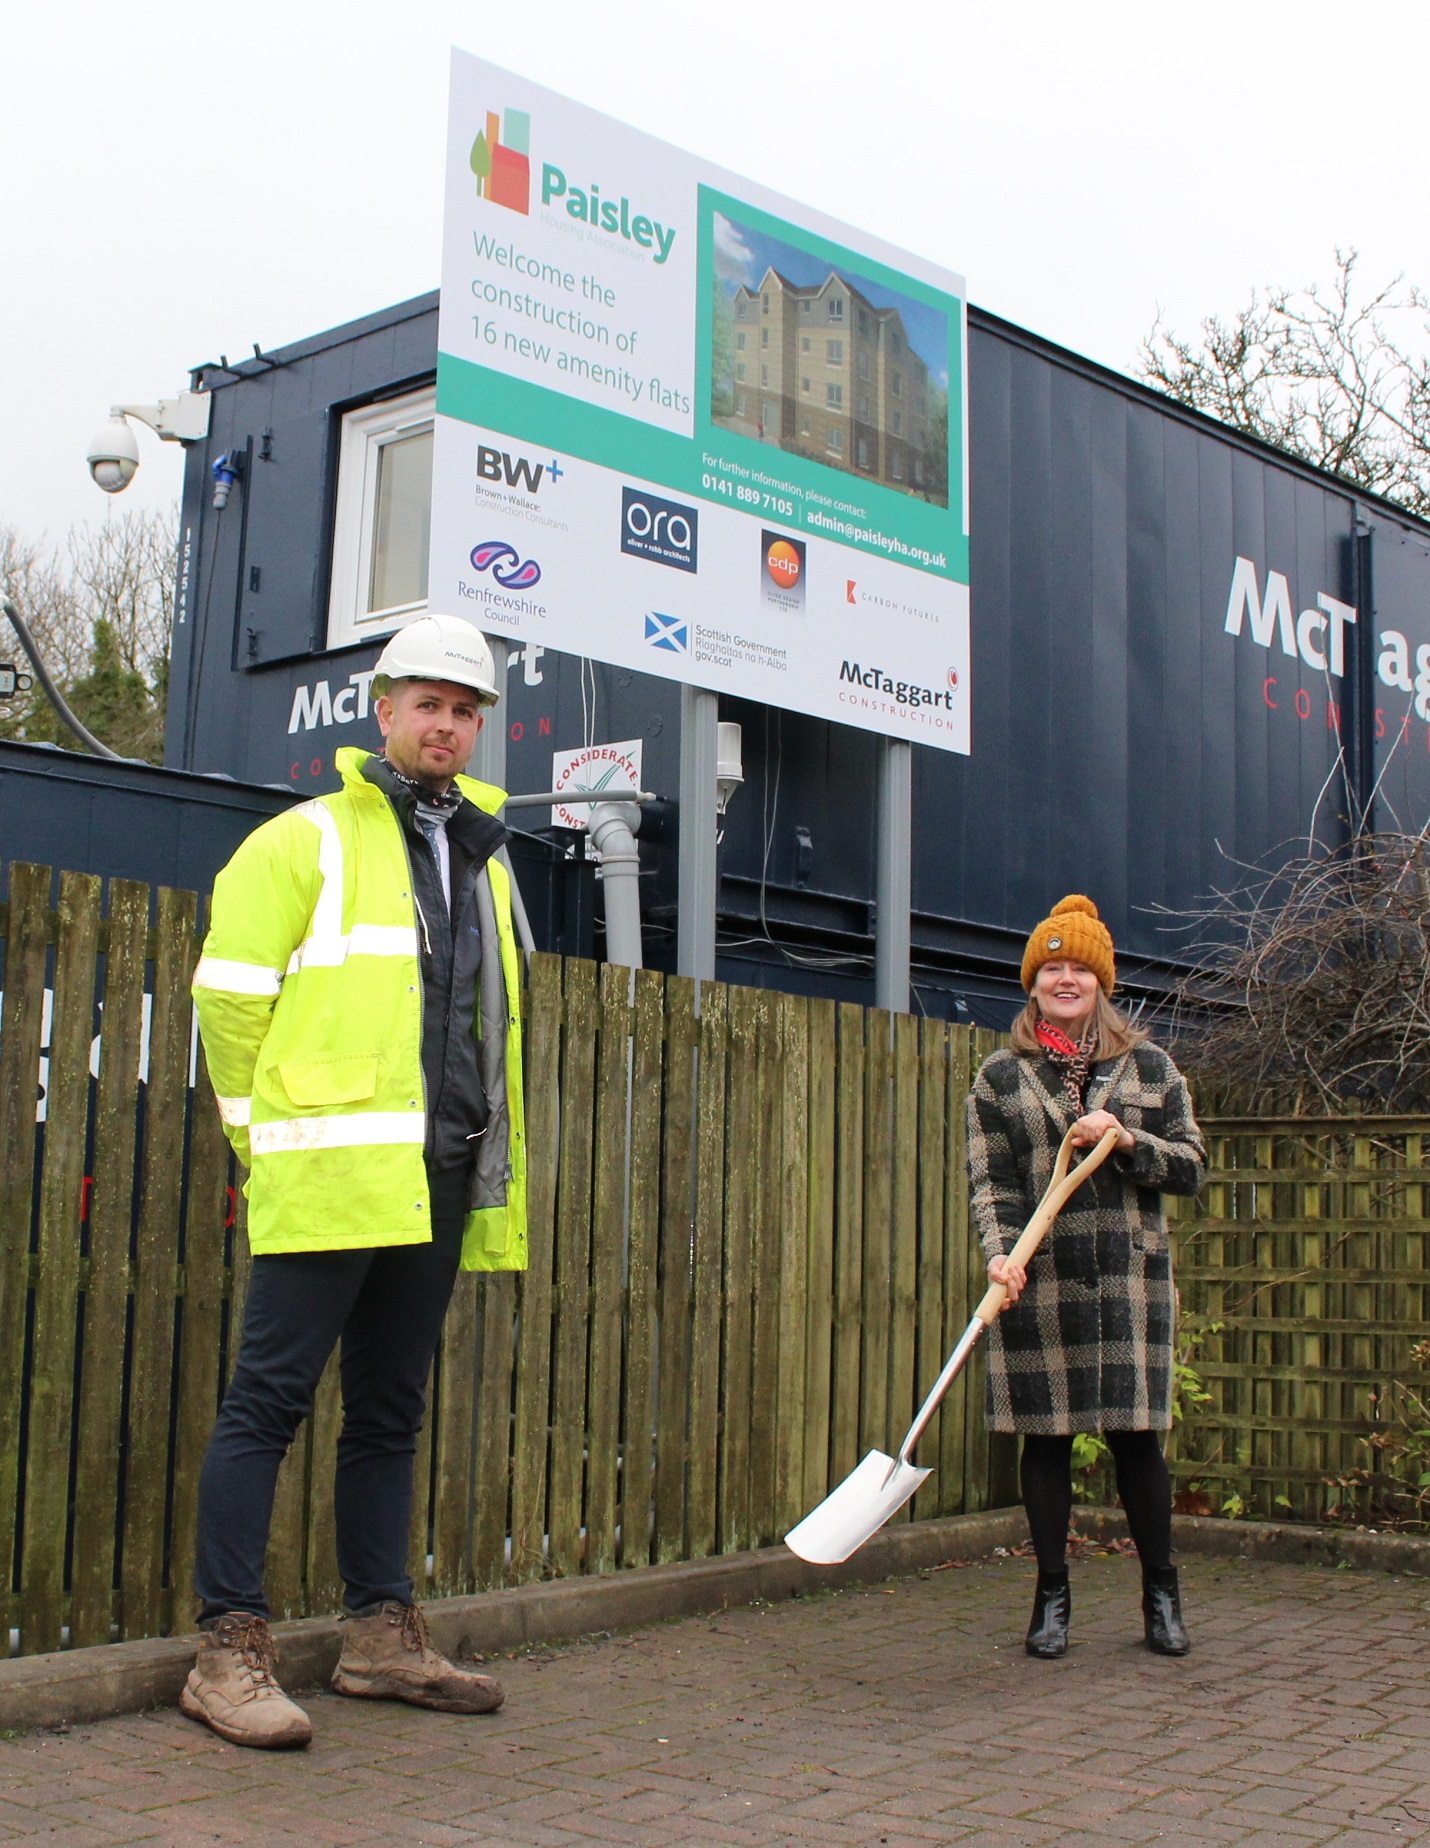 Work begins to create new amenity homes in Paisley